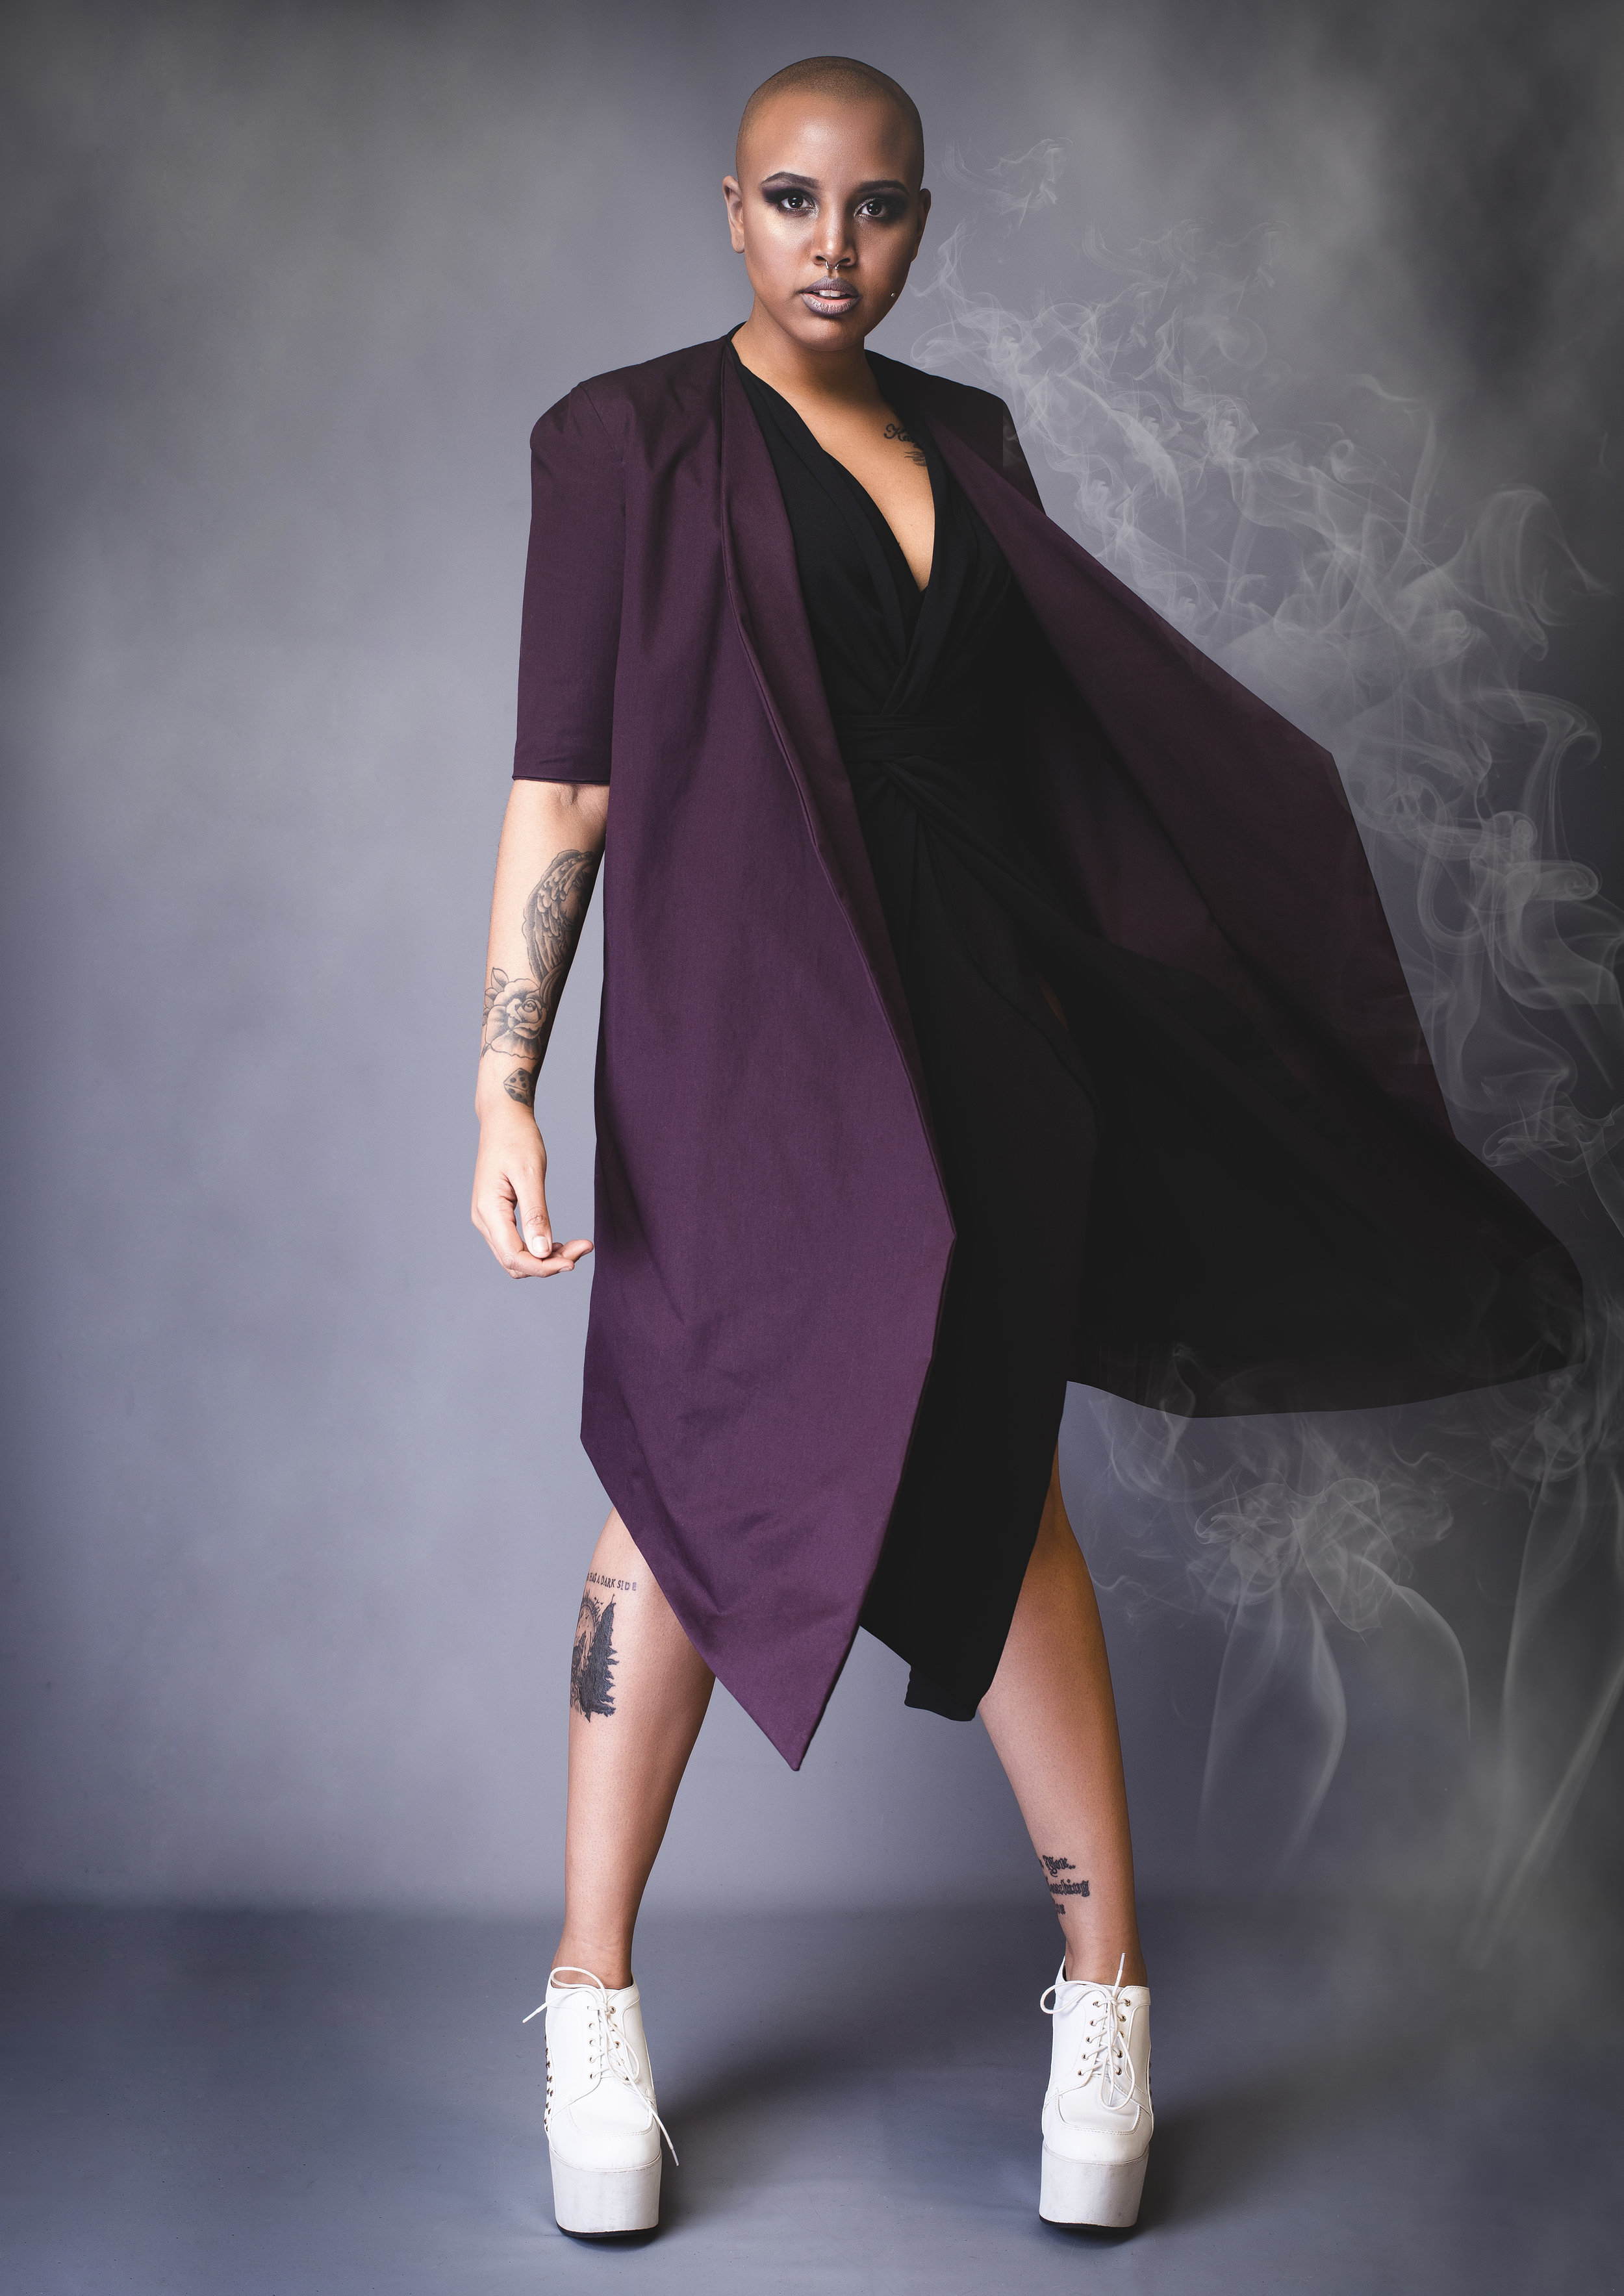 zaramia-ava-zaramiaava-leeds-fashion-designer-leedsfashiondesigner-stylist-leeds-stylist-leedsstylist-ethical-sustainable-minimalist-versatile-drape-wrap-purple-cowl-ryo-emi-black-4